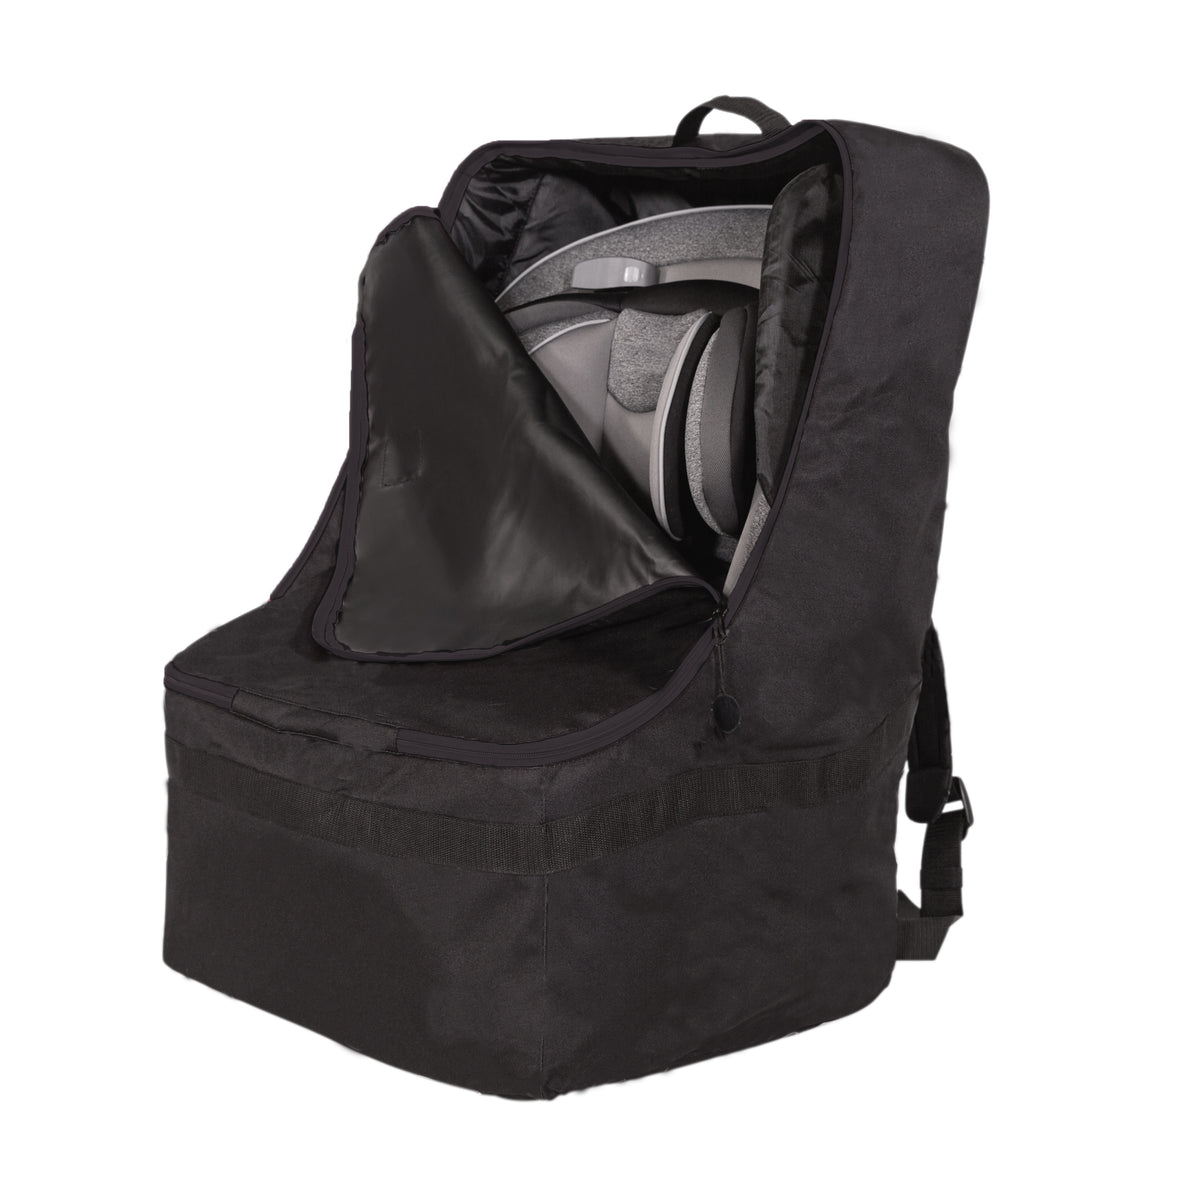 J.L. Childress Ultimate Backpack Padded Car Seat Travel Bag - Durable, Secure, Universal Airport Bag U2